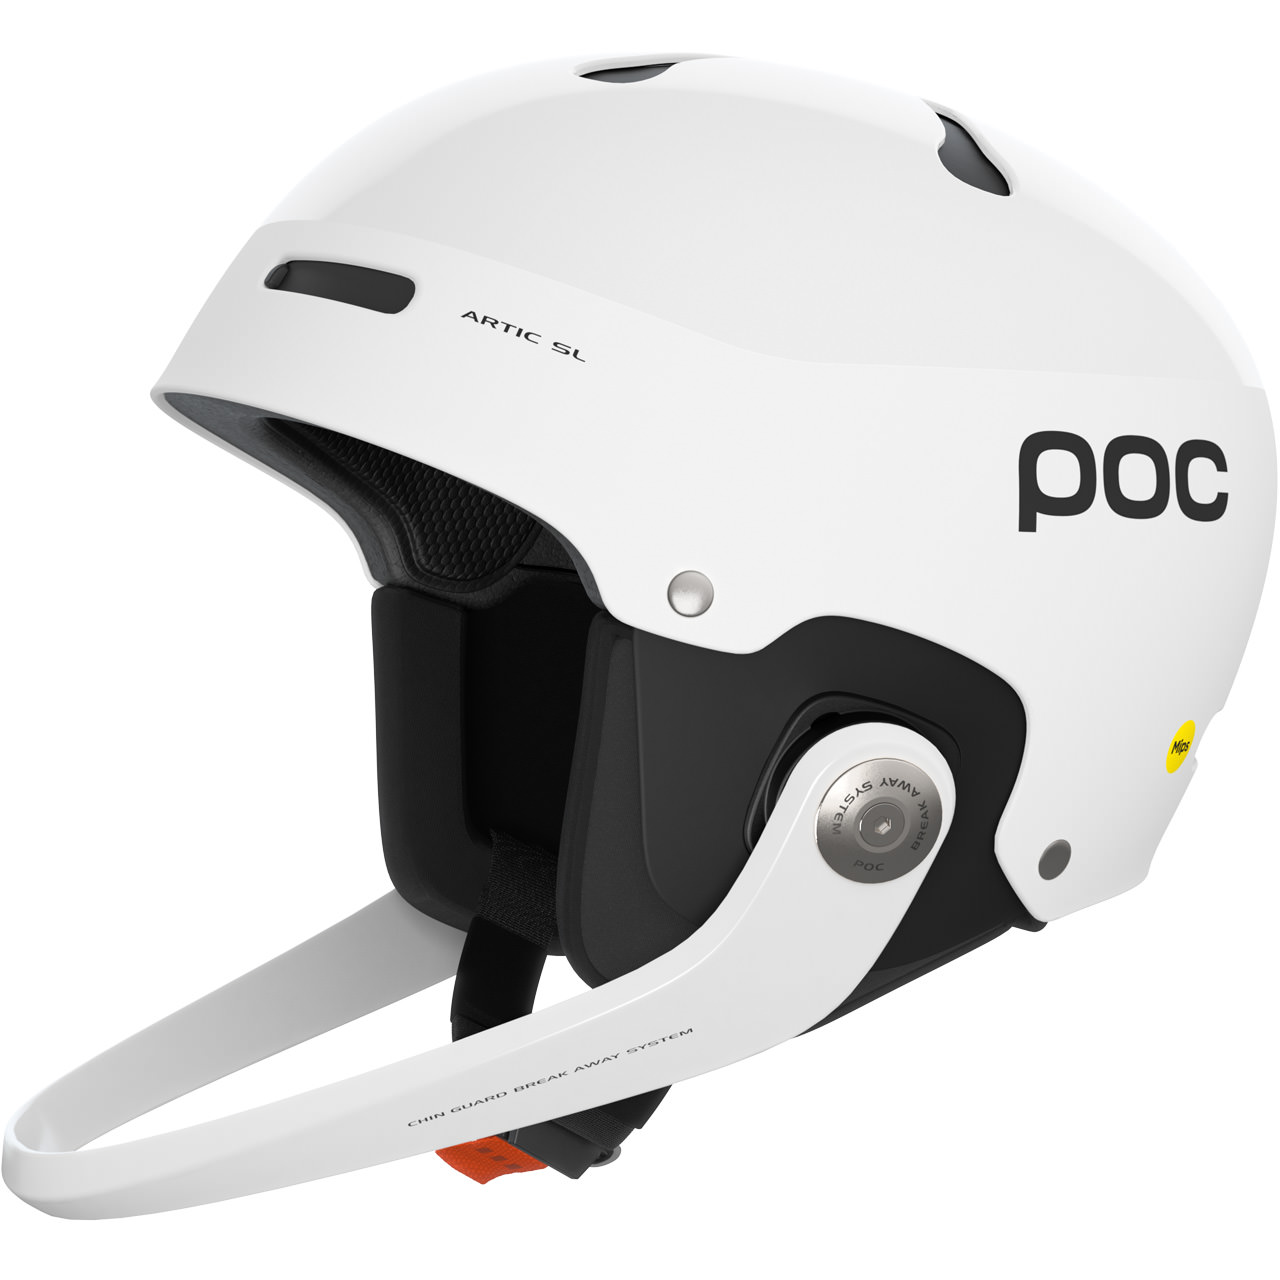 POC Artic SL Mips hydrogen |POC Ski Helmets Adults | POC Ski Helmets | POC P BRANDS | XSPO.com